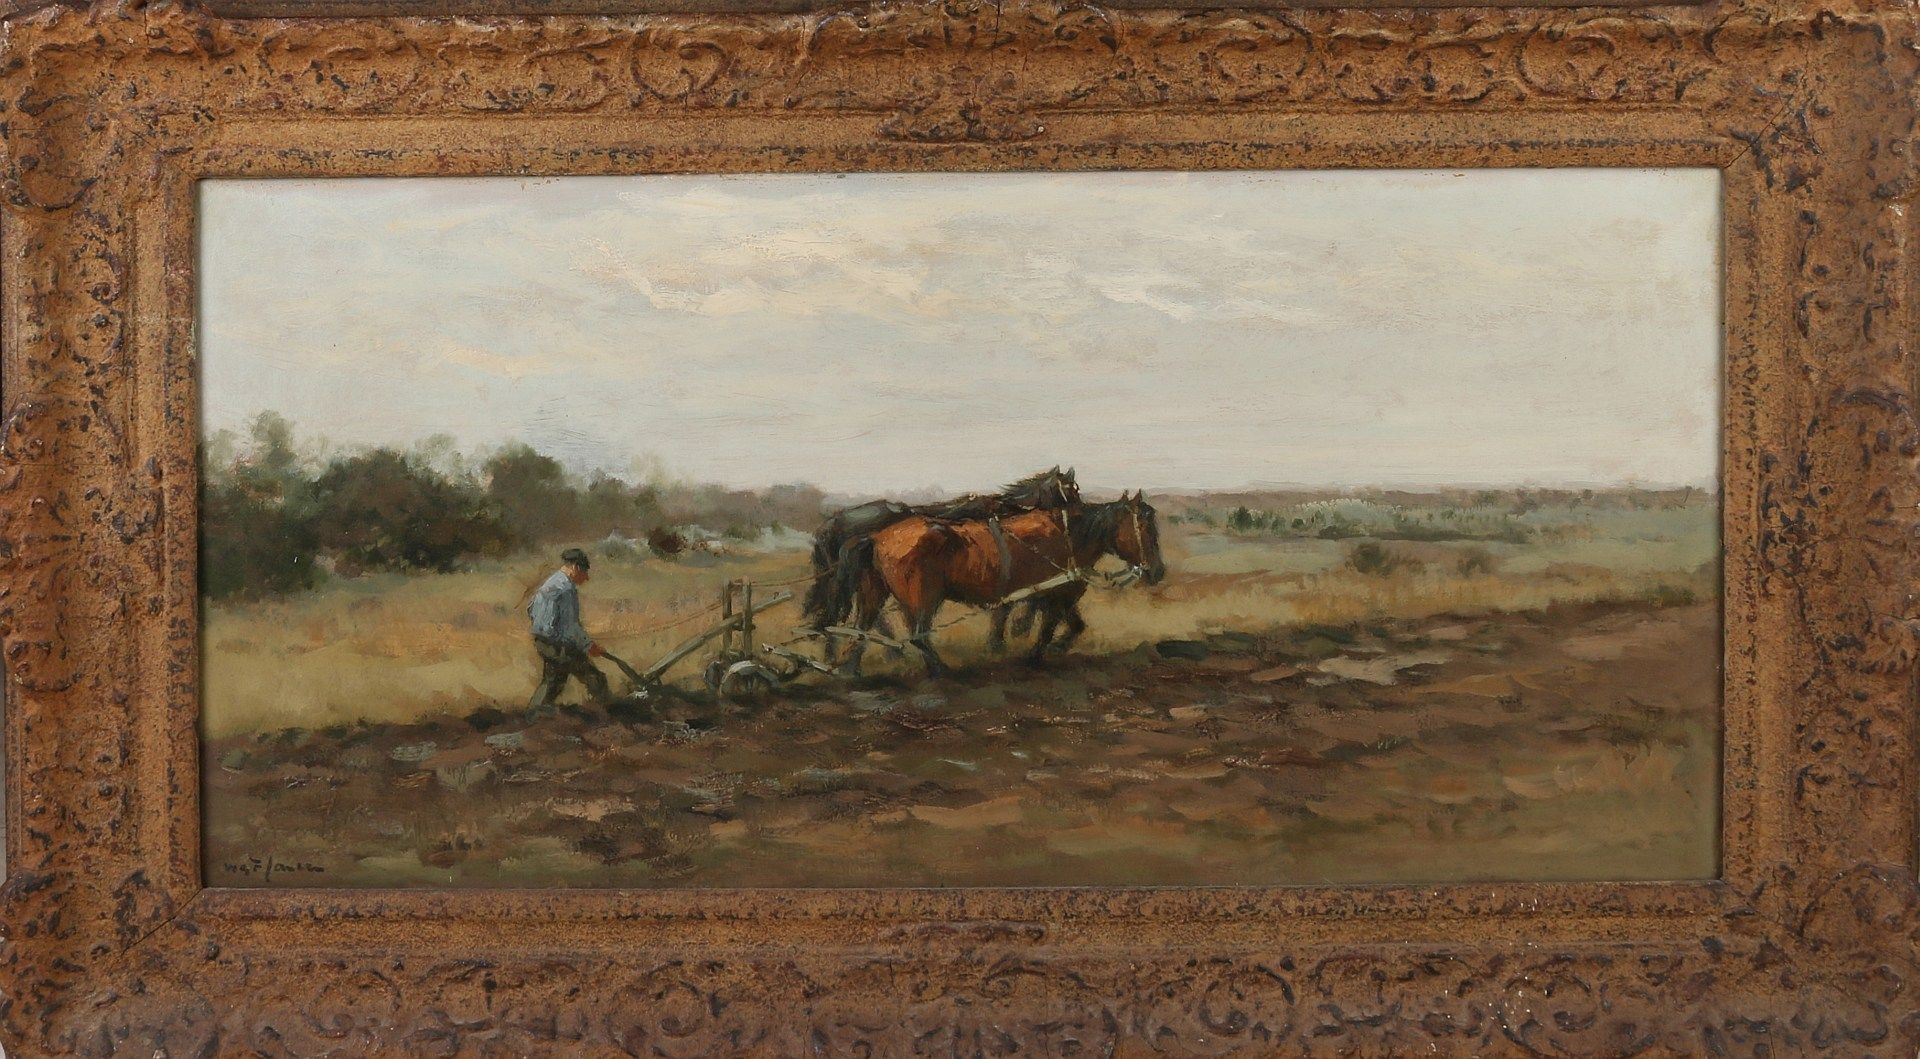 WGF Jansen, Plowing farmer with horse team